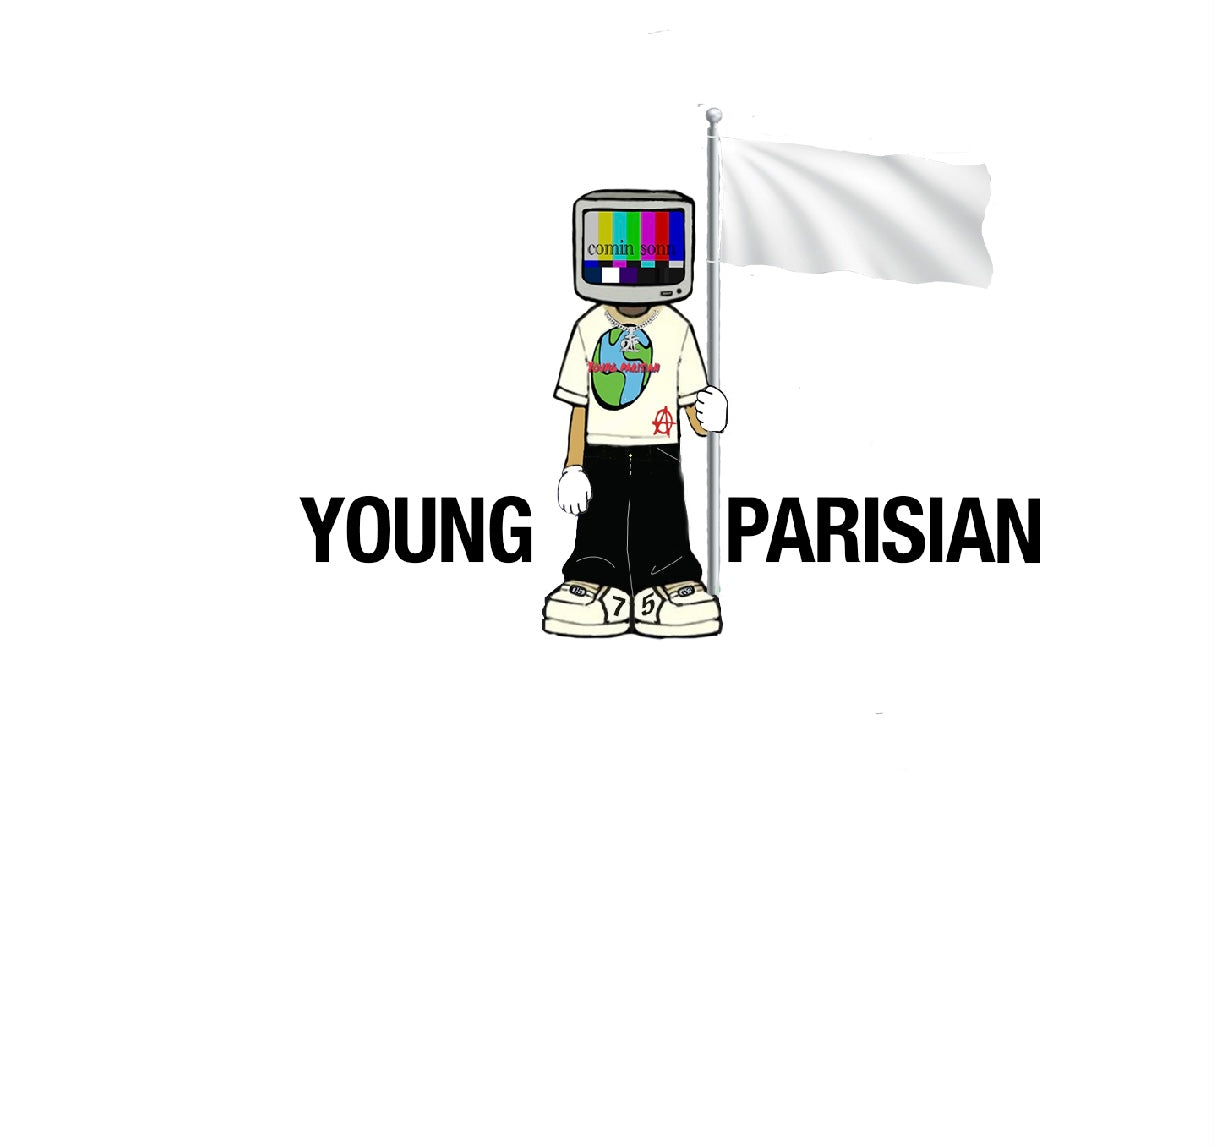 YOUNG PARISIAN